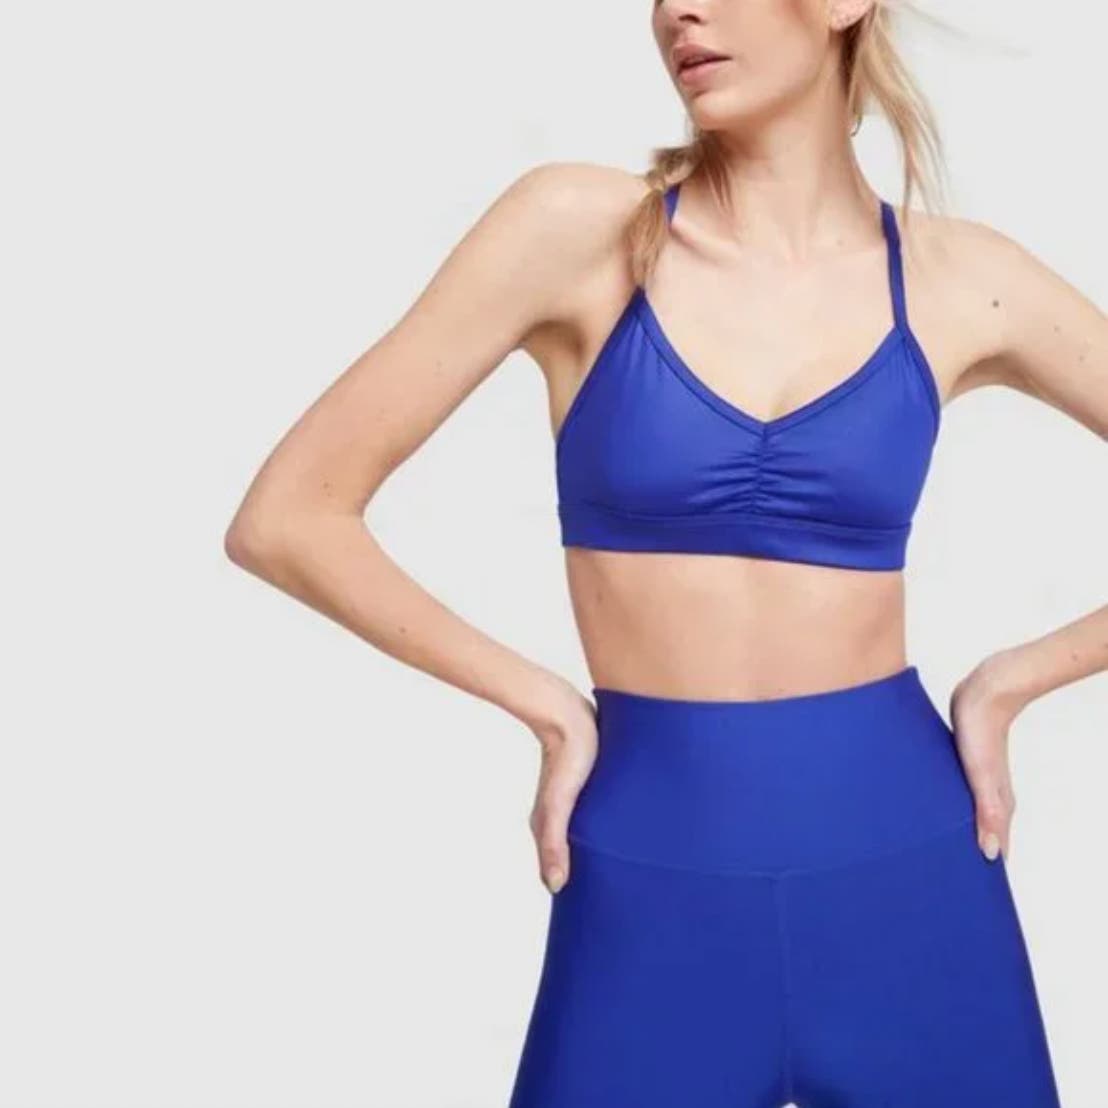 Alo Yoga Sunny Strappy minimalist sports bra Deep Electric Blue